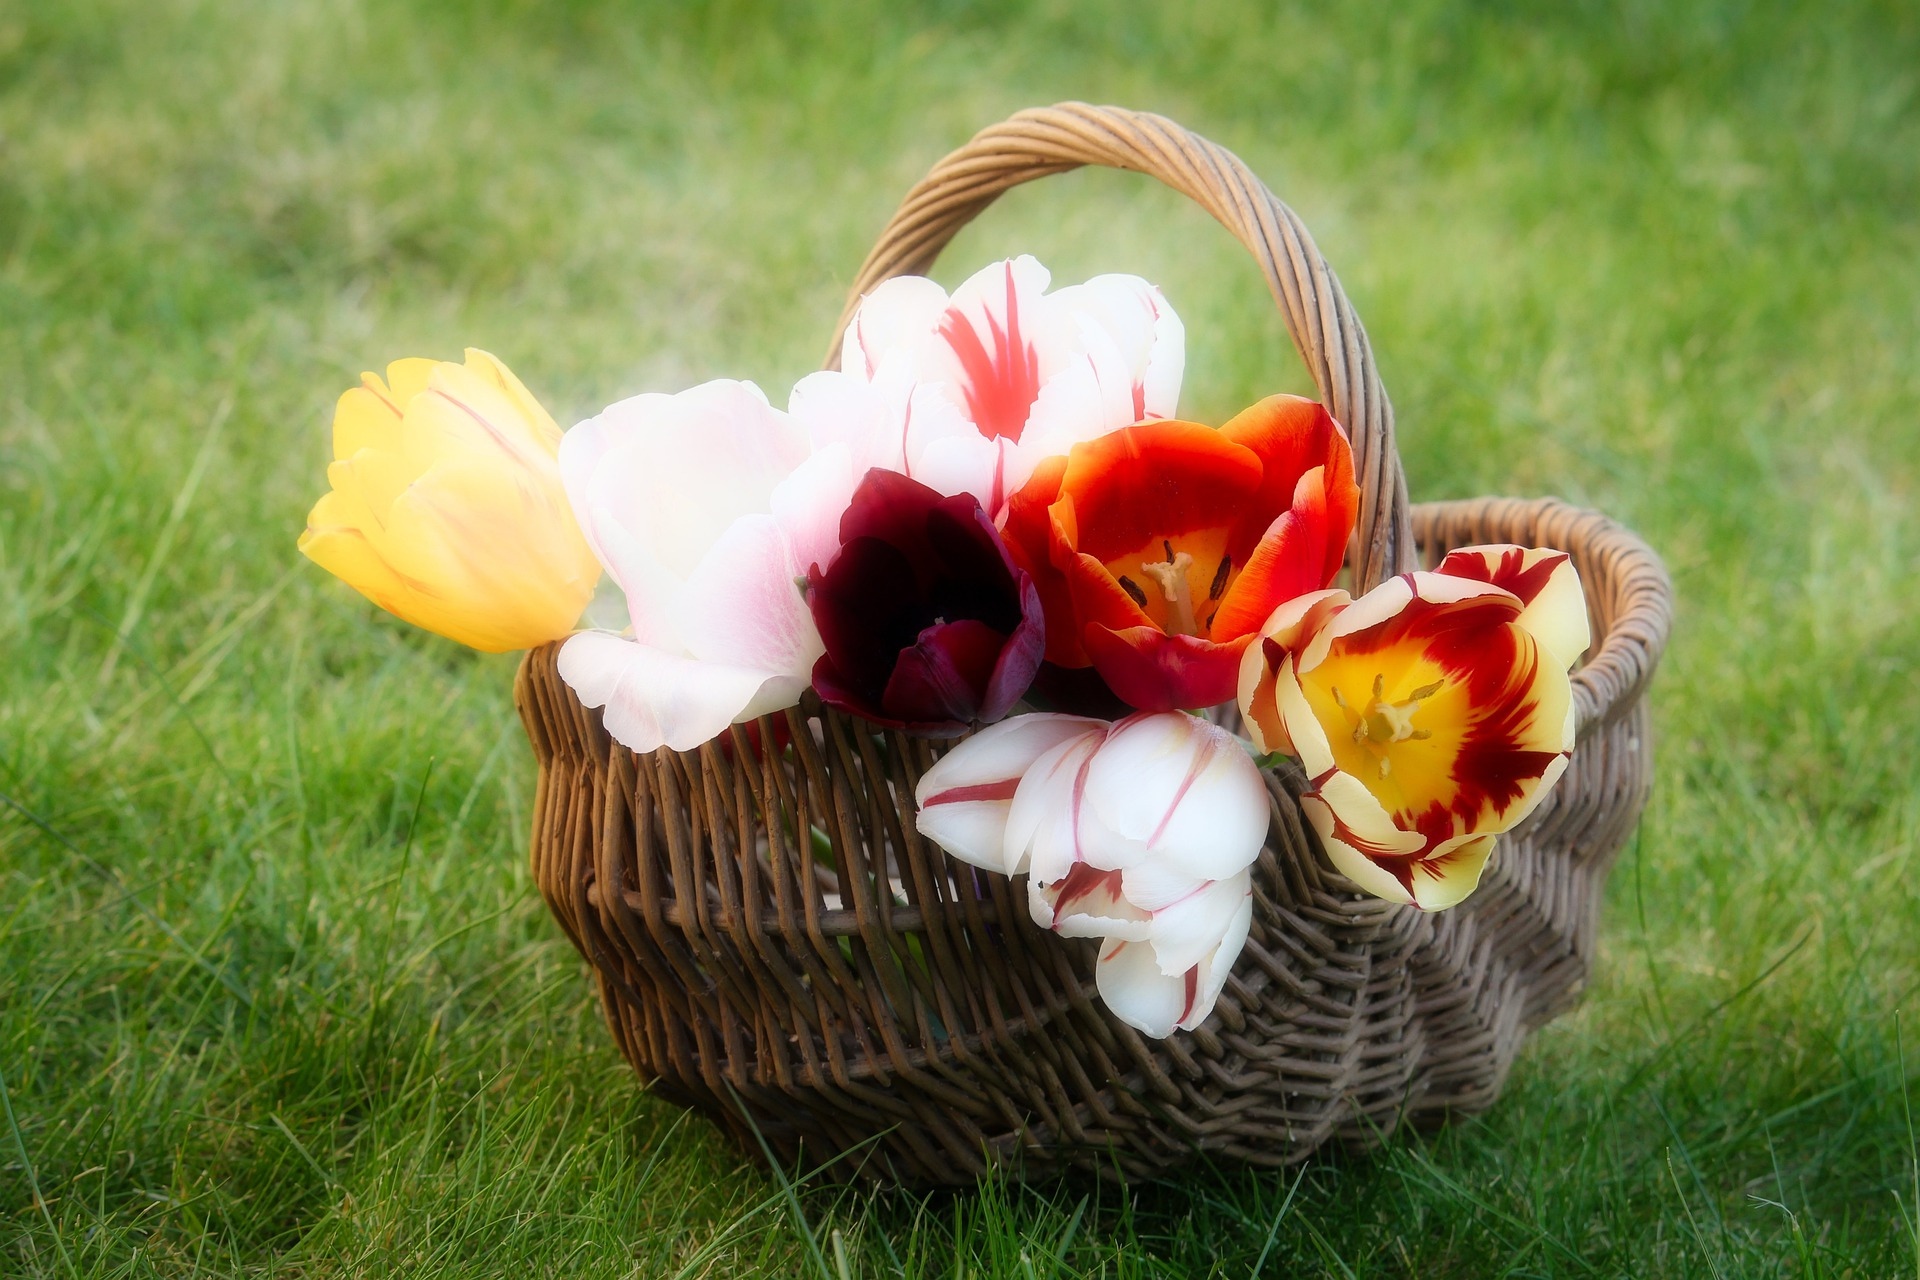 Тюльпаны в корзине картинки. Корзинка с тюльпанами. Корзина цветов «Весенняя». Корзина с весенними цветами. Цветы тюльпаны в корзинке.